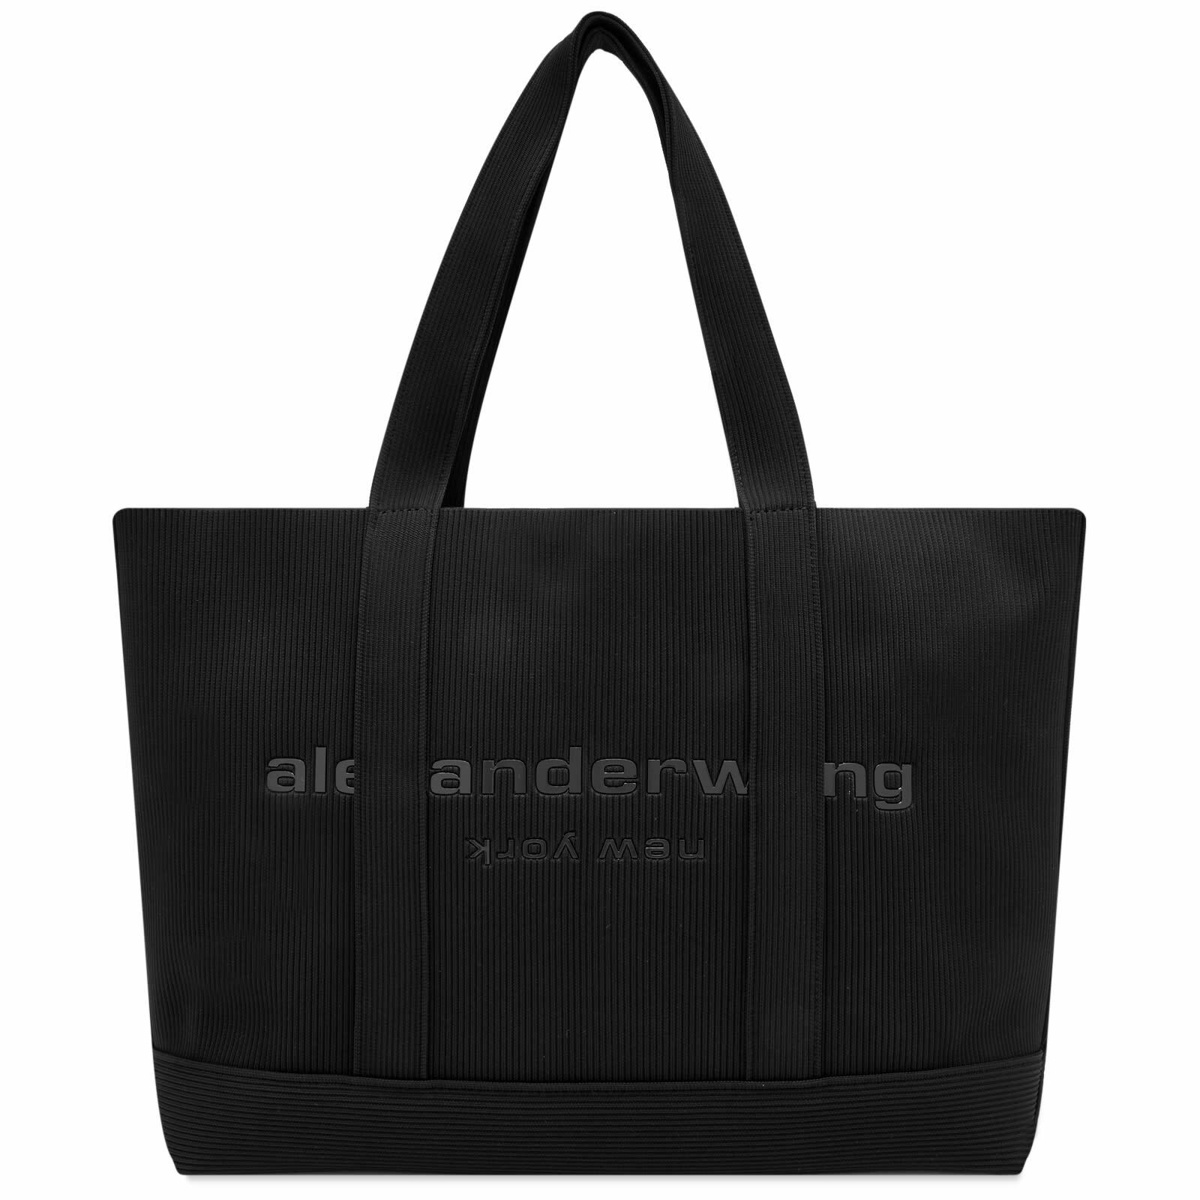 Alexander Wang Women's Knit Tote in Black Alexander Wang